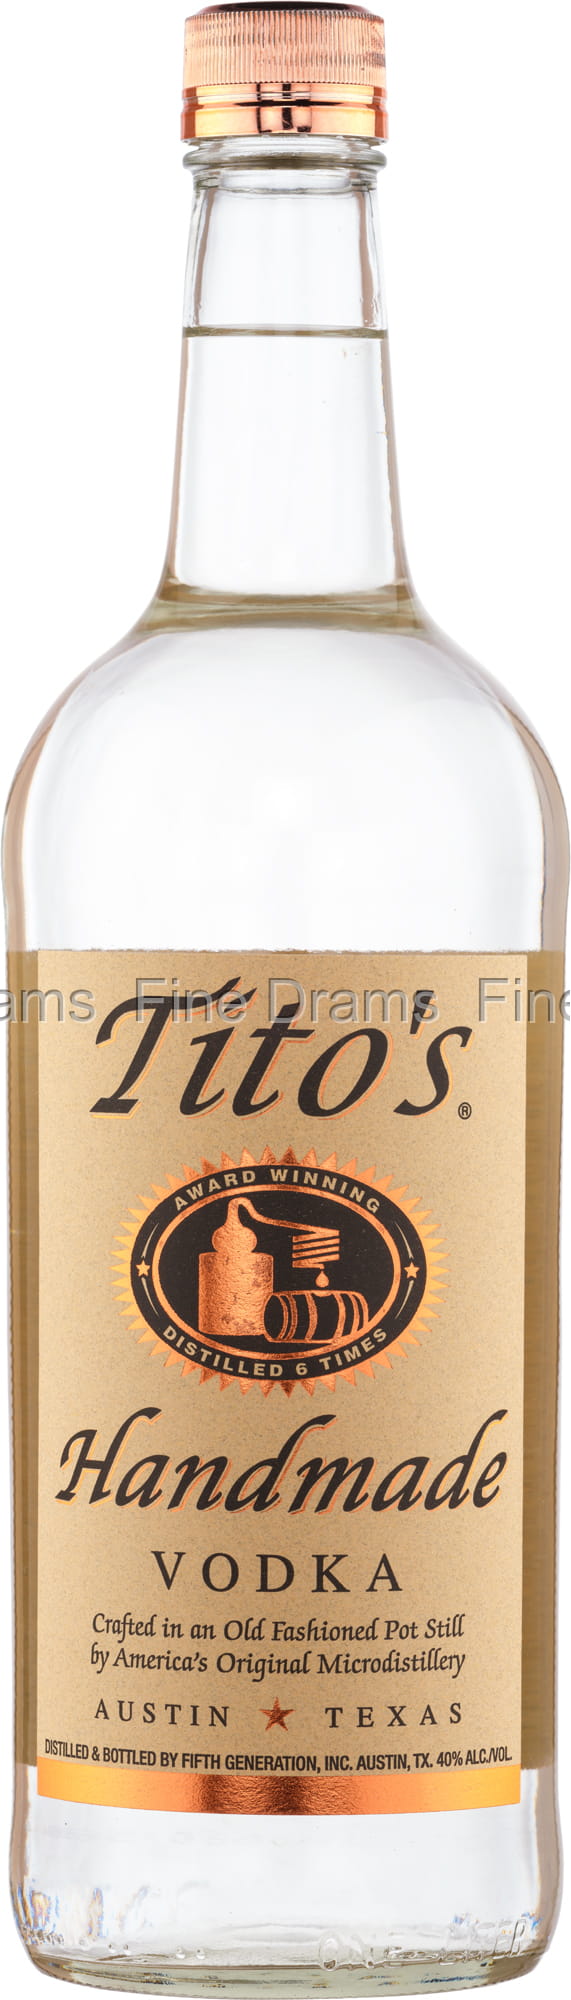 1 liter of tito's